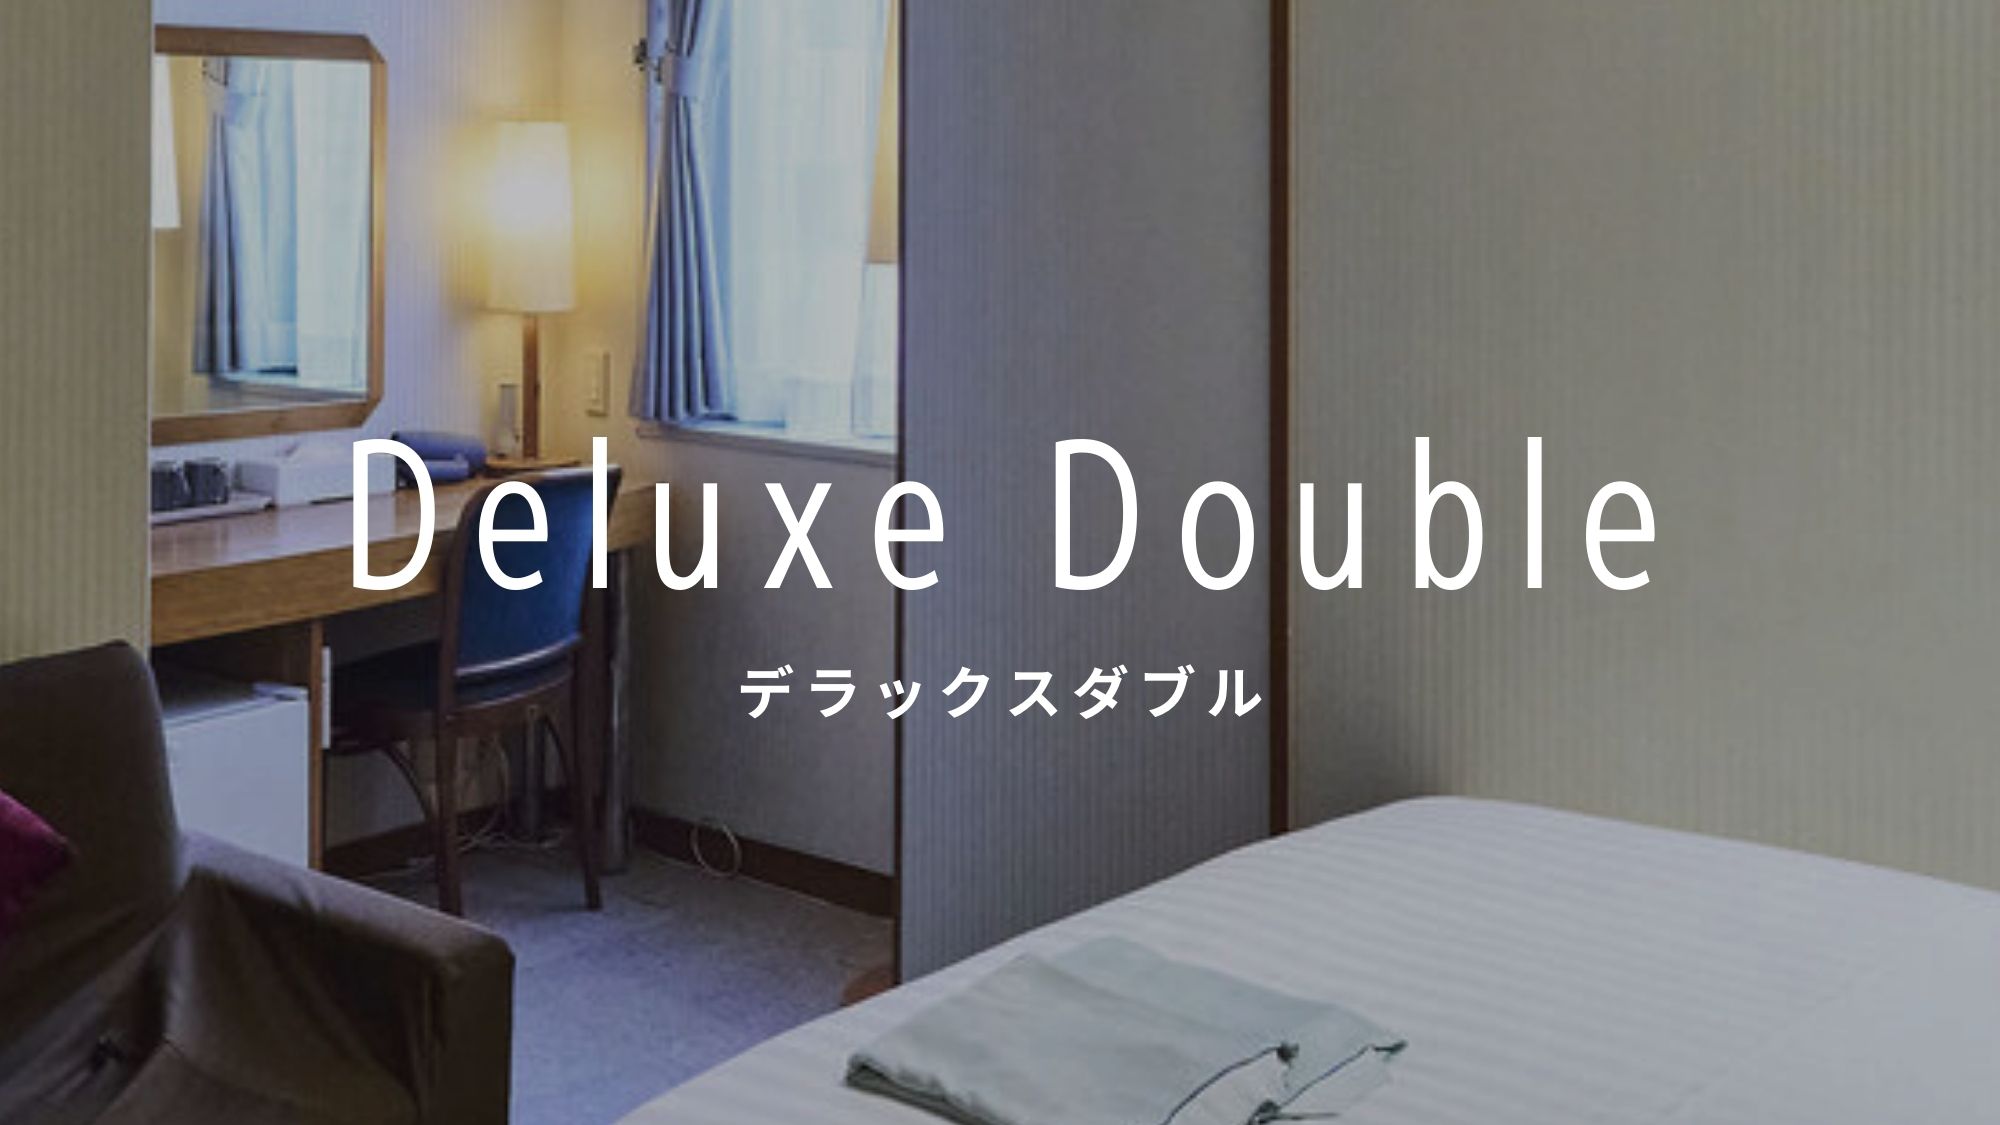 Deluxe double